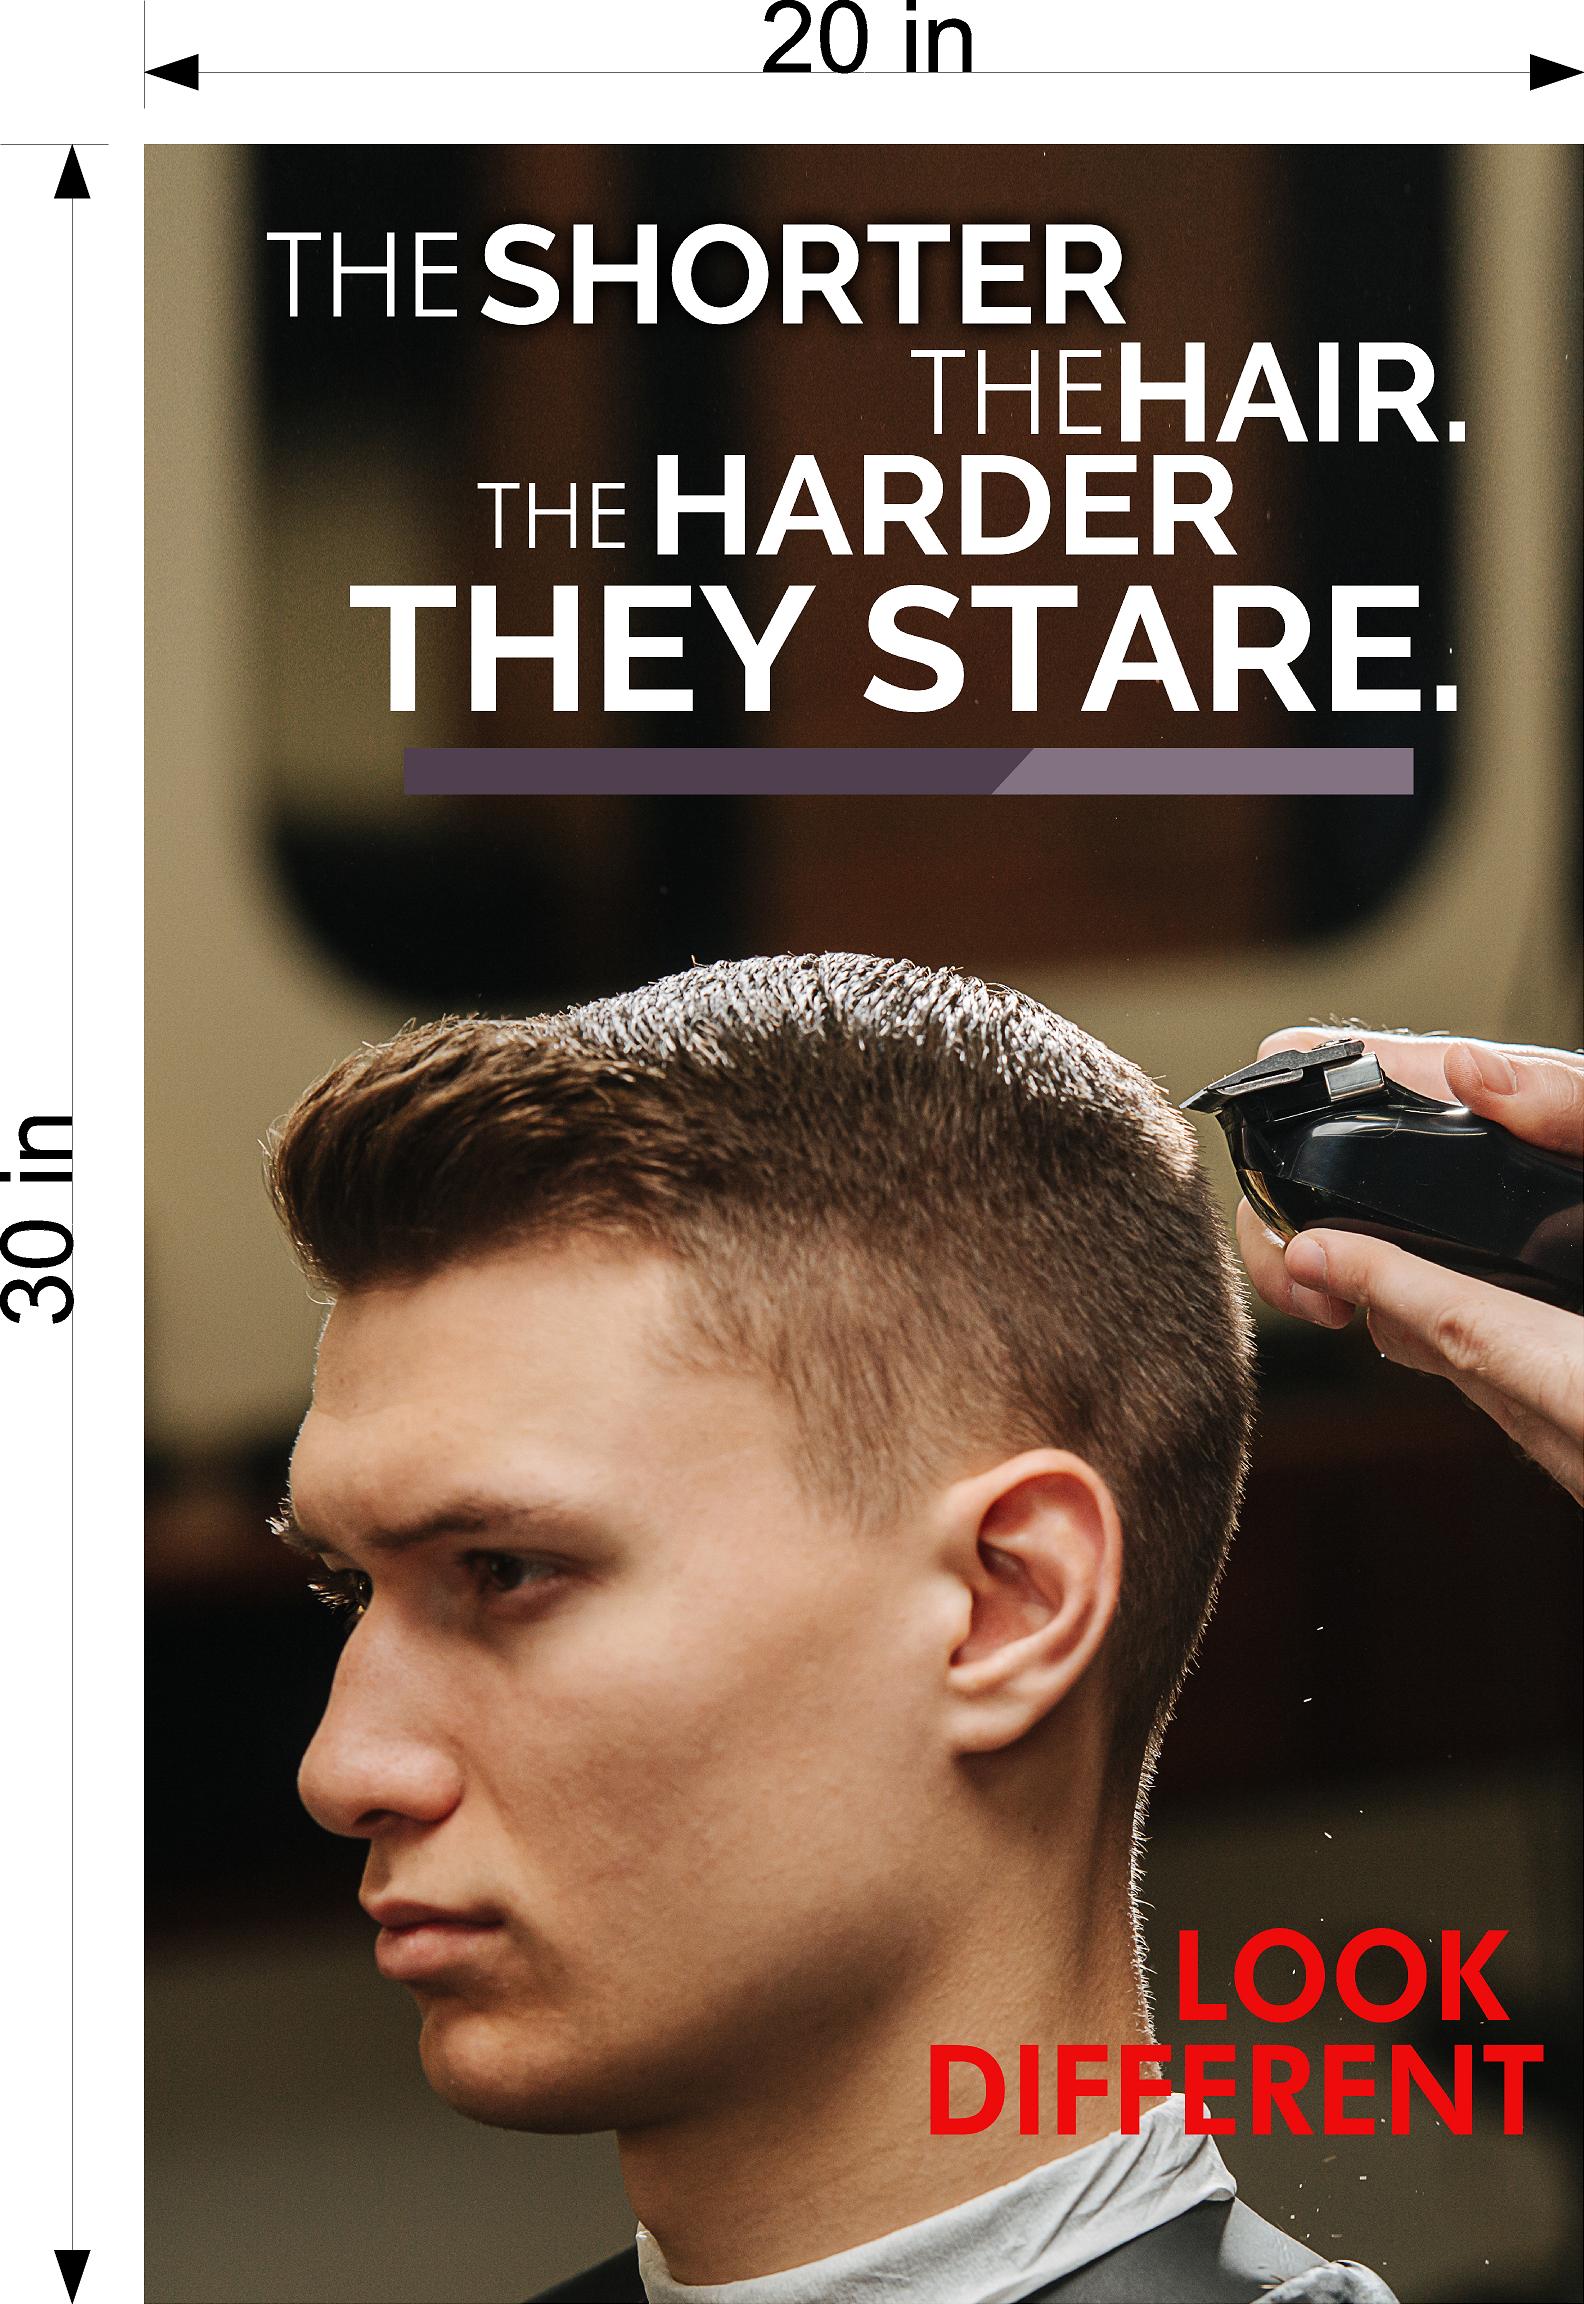 Barber 05 Photo-Realistic Paper Poster Interior Sign Wall Window Non-Laminated Man Men Boy Beard Haircut Vertical